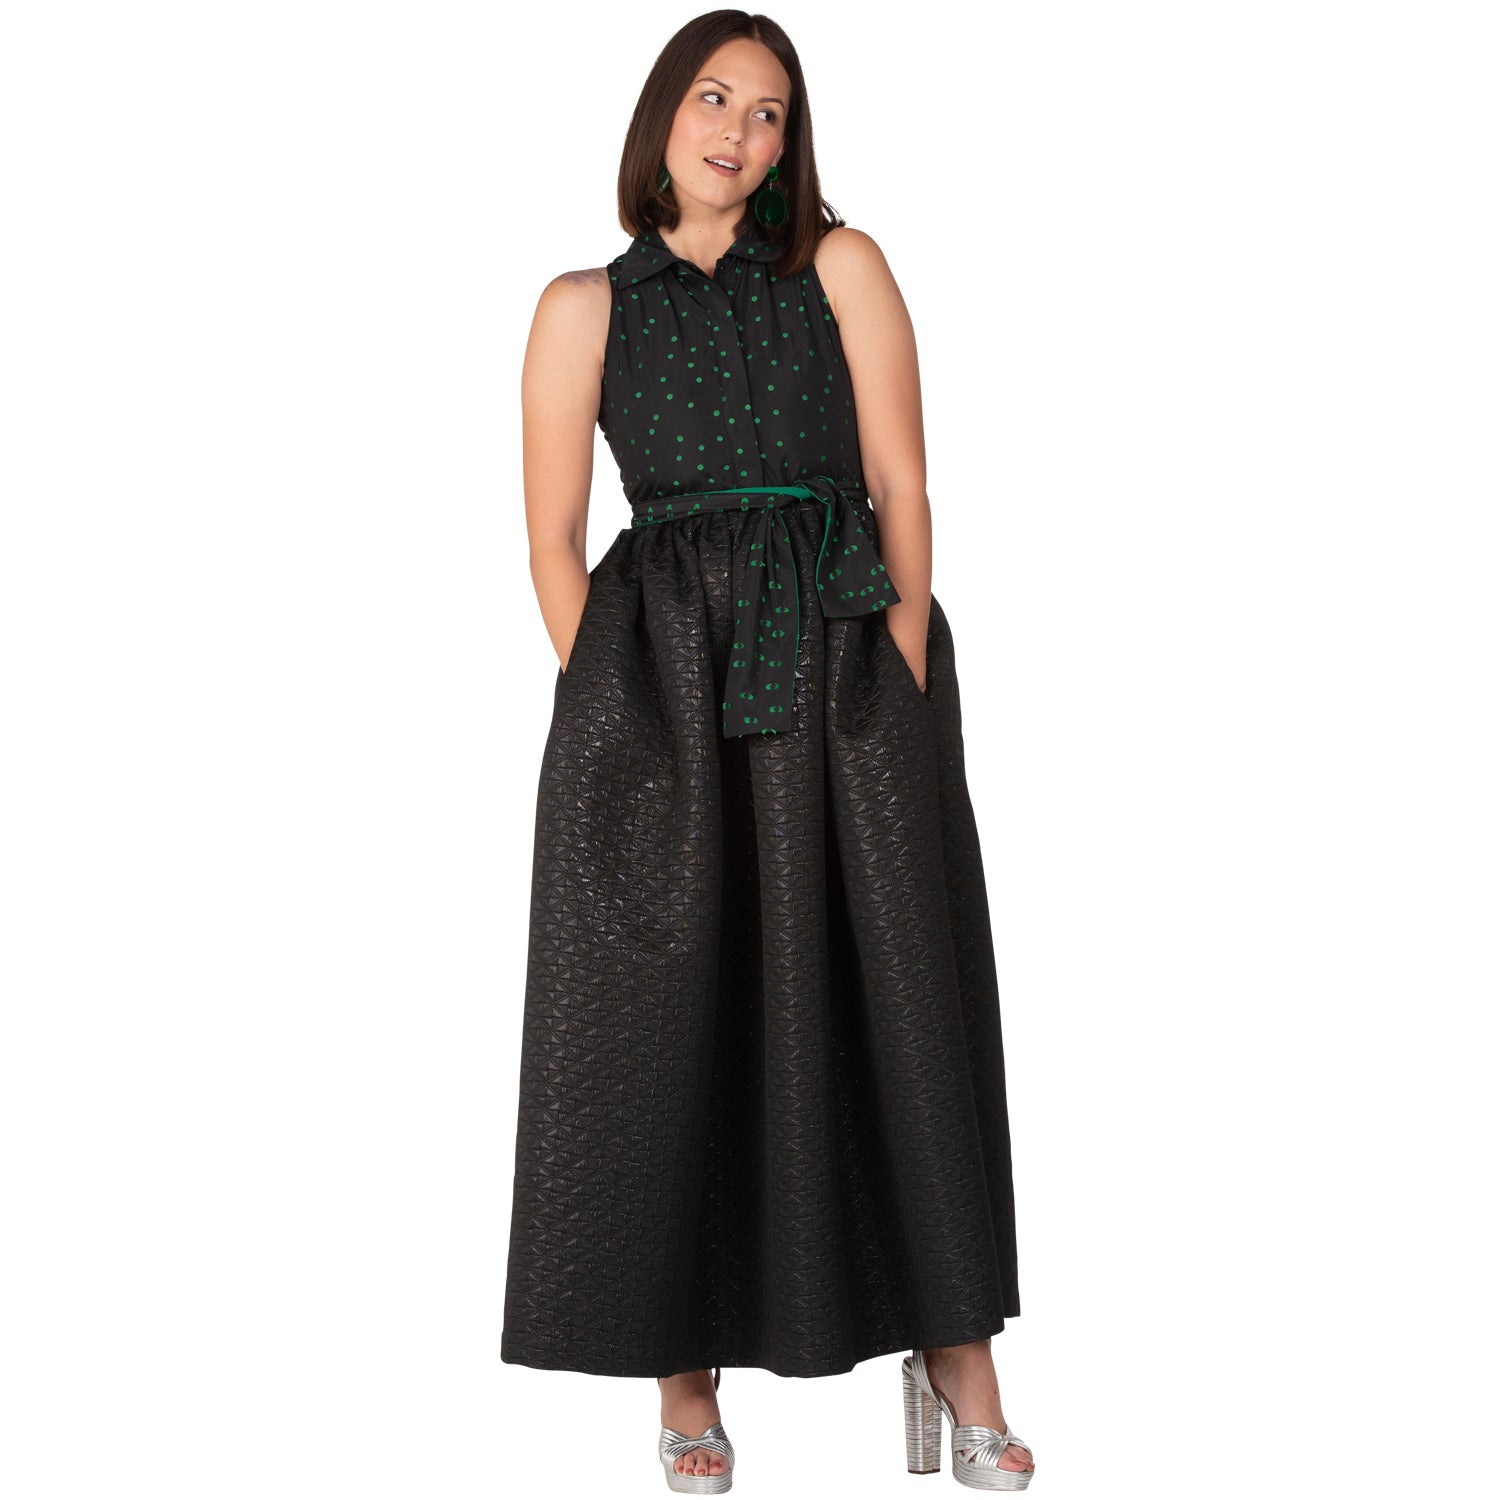 SAMPLE The Sleeveless New Look Shirtdress - Green Dot & Black Brocade